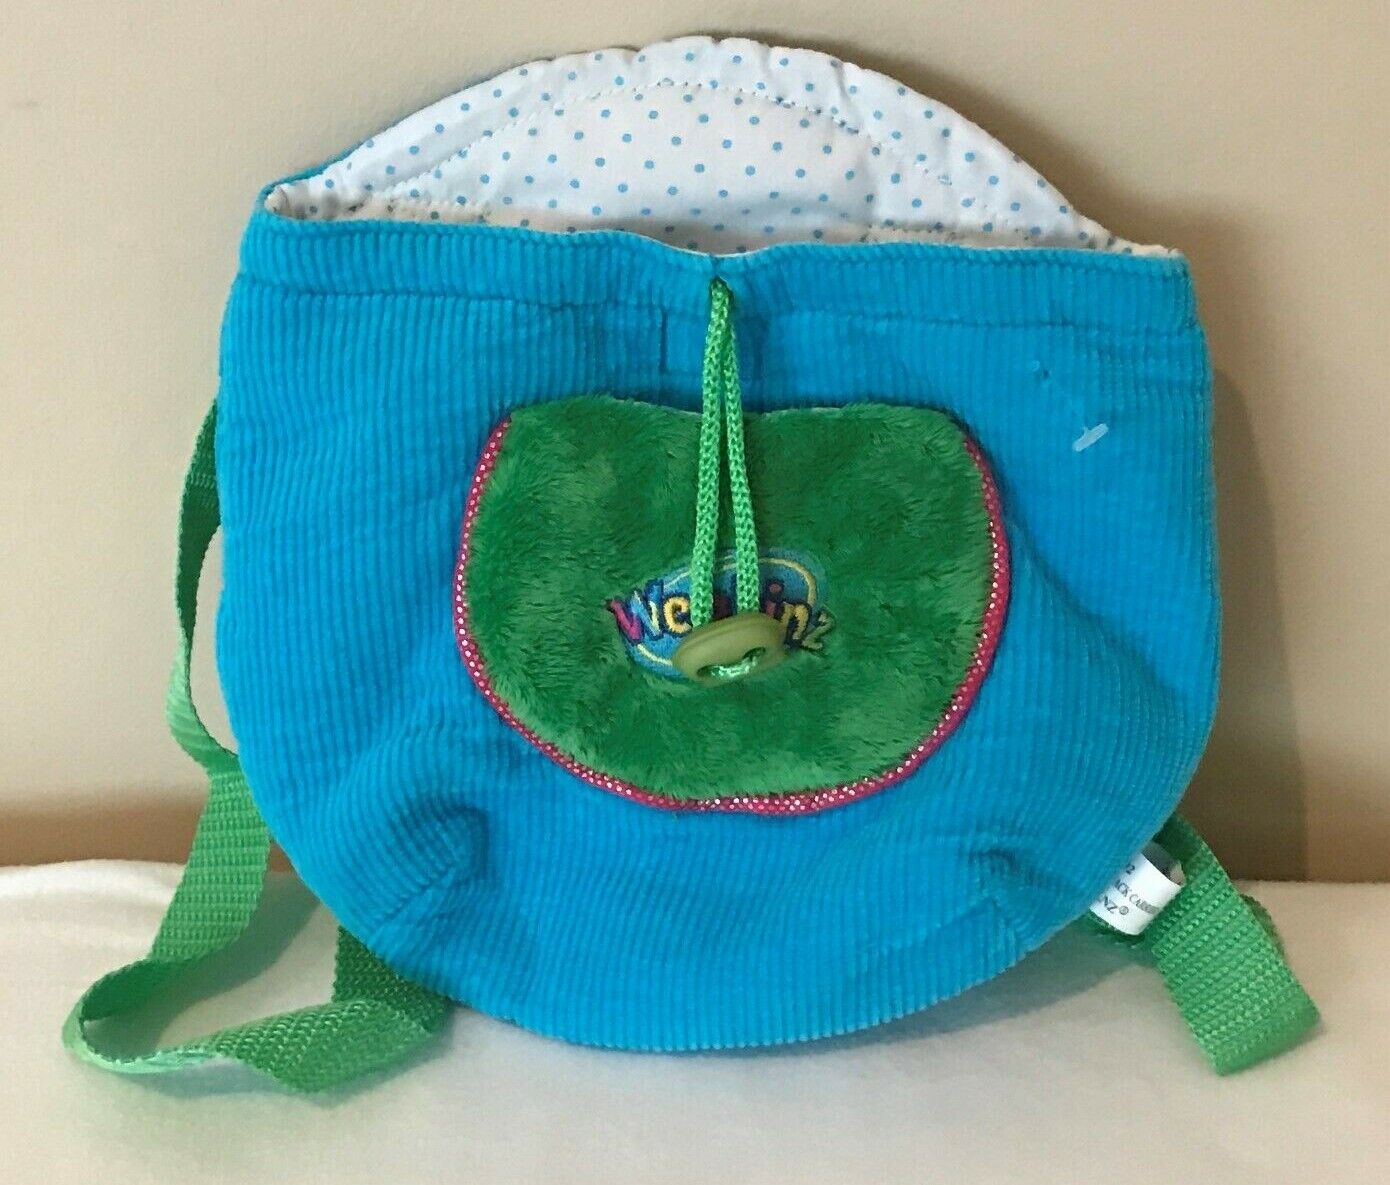 Webkinz Pet Backpack Carrier Knapsack By Ganz Hc102 Blue Plush Bag